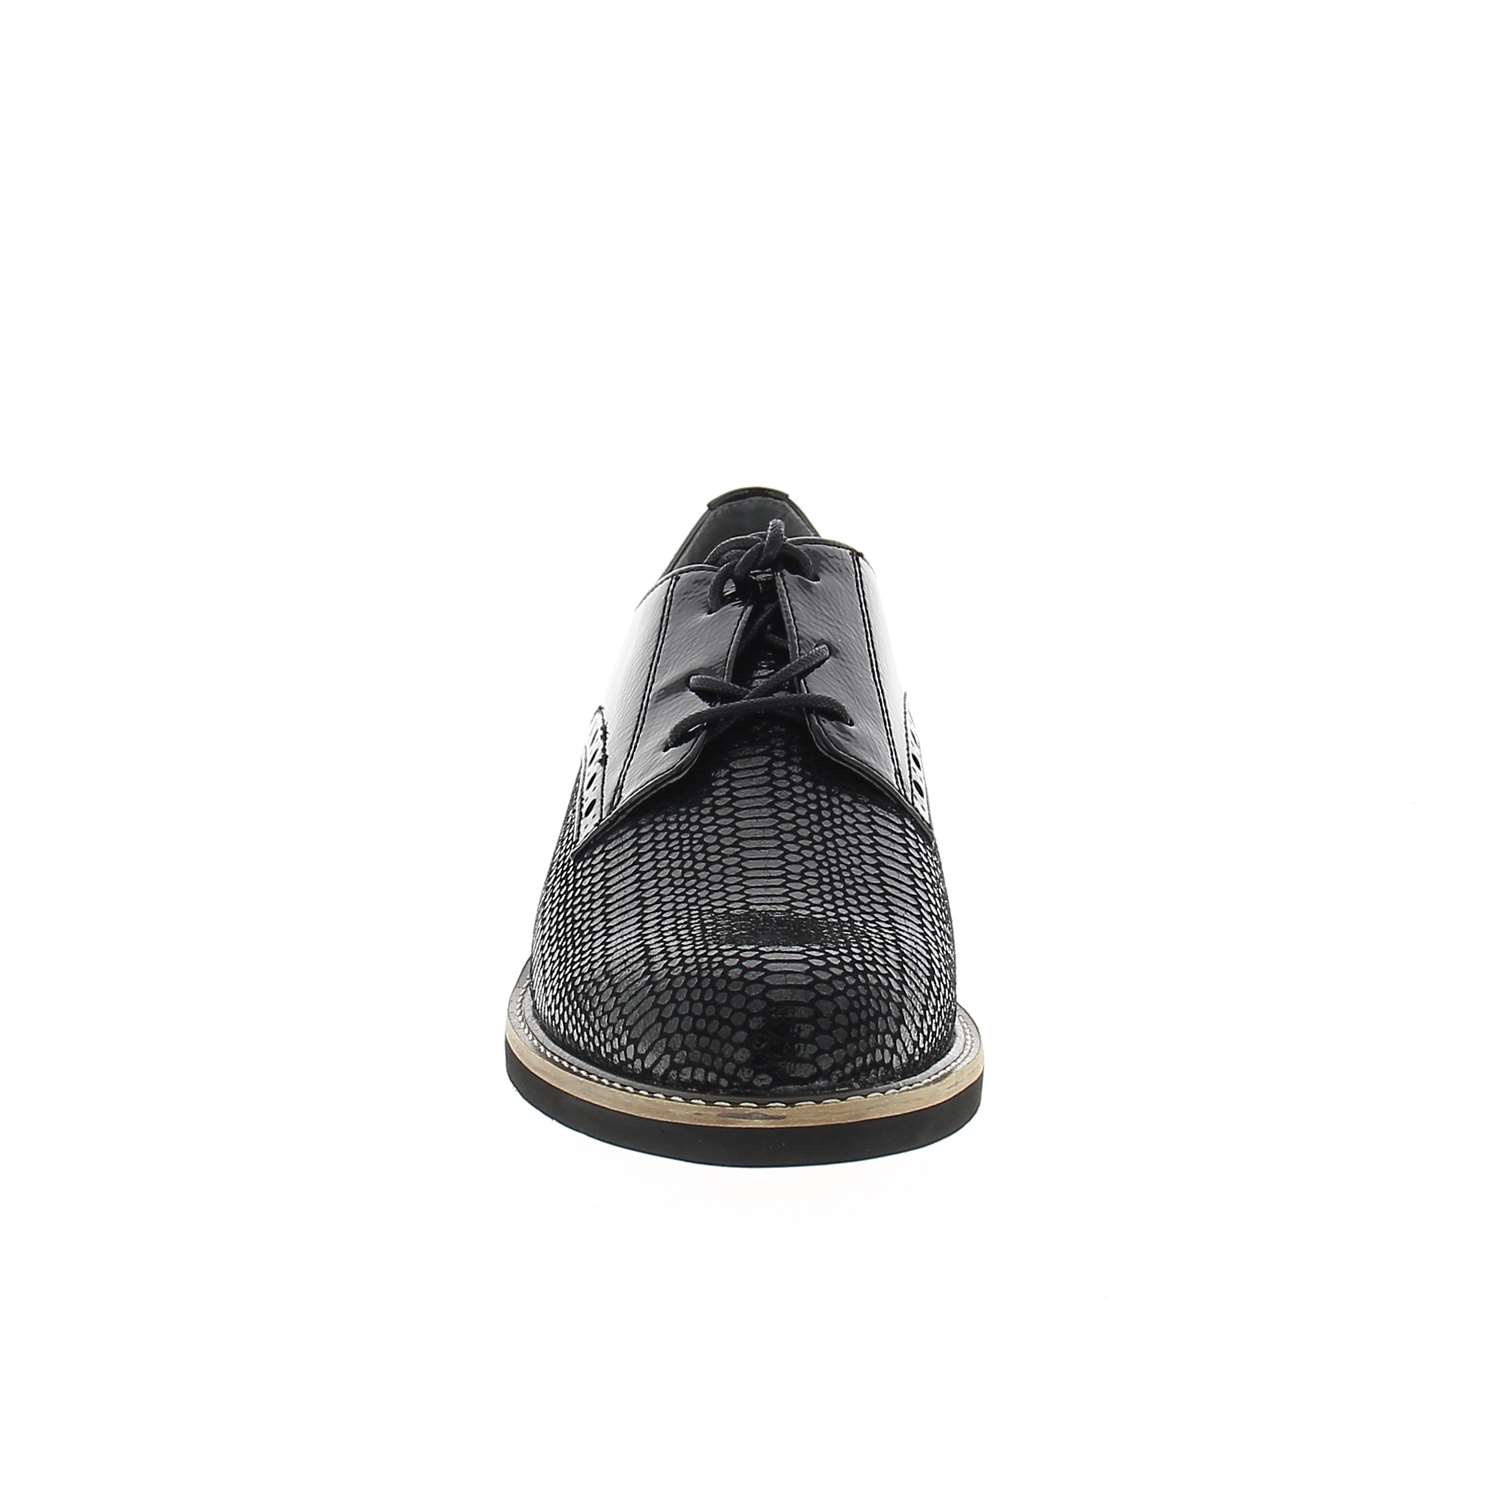 03 - CHAMOI - FUGITIVE - Chaussures à lacets - Cuir